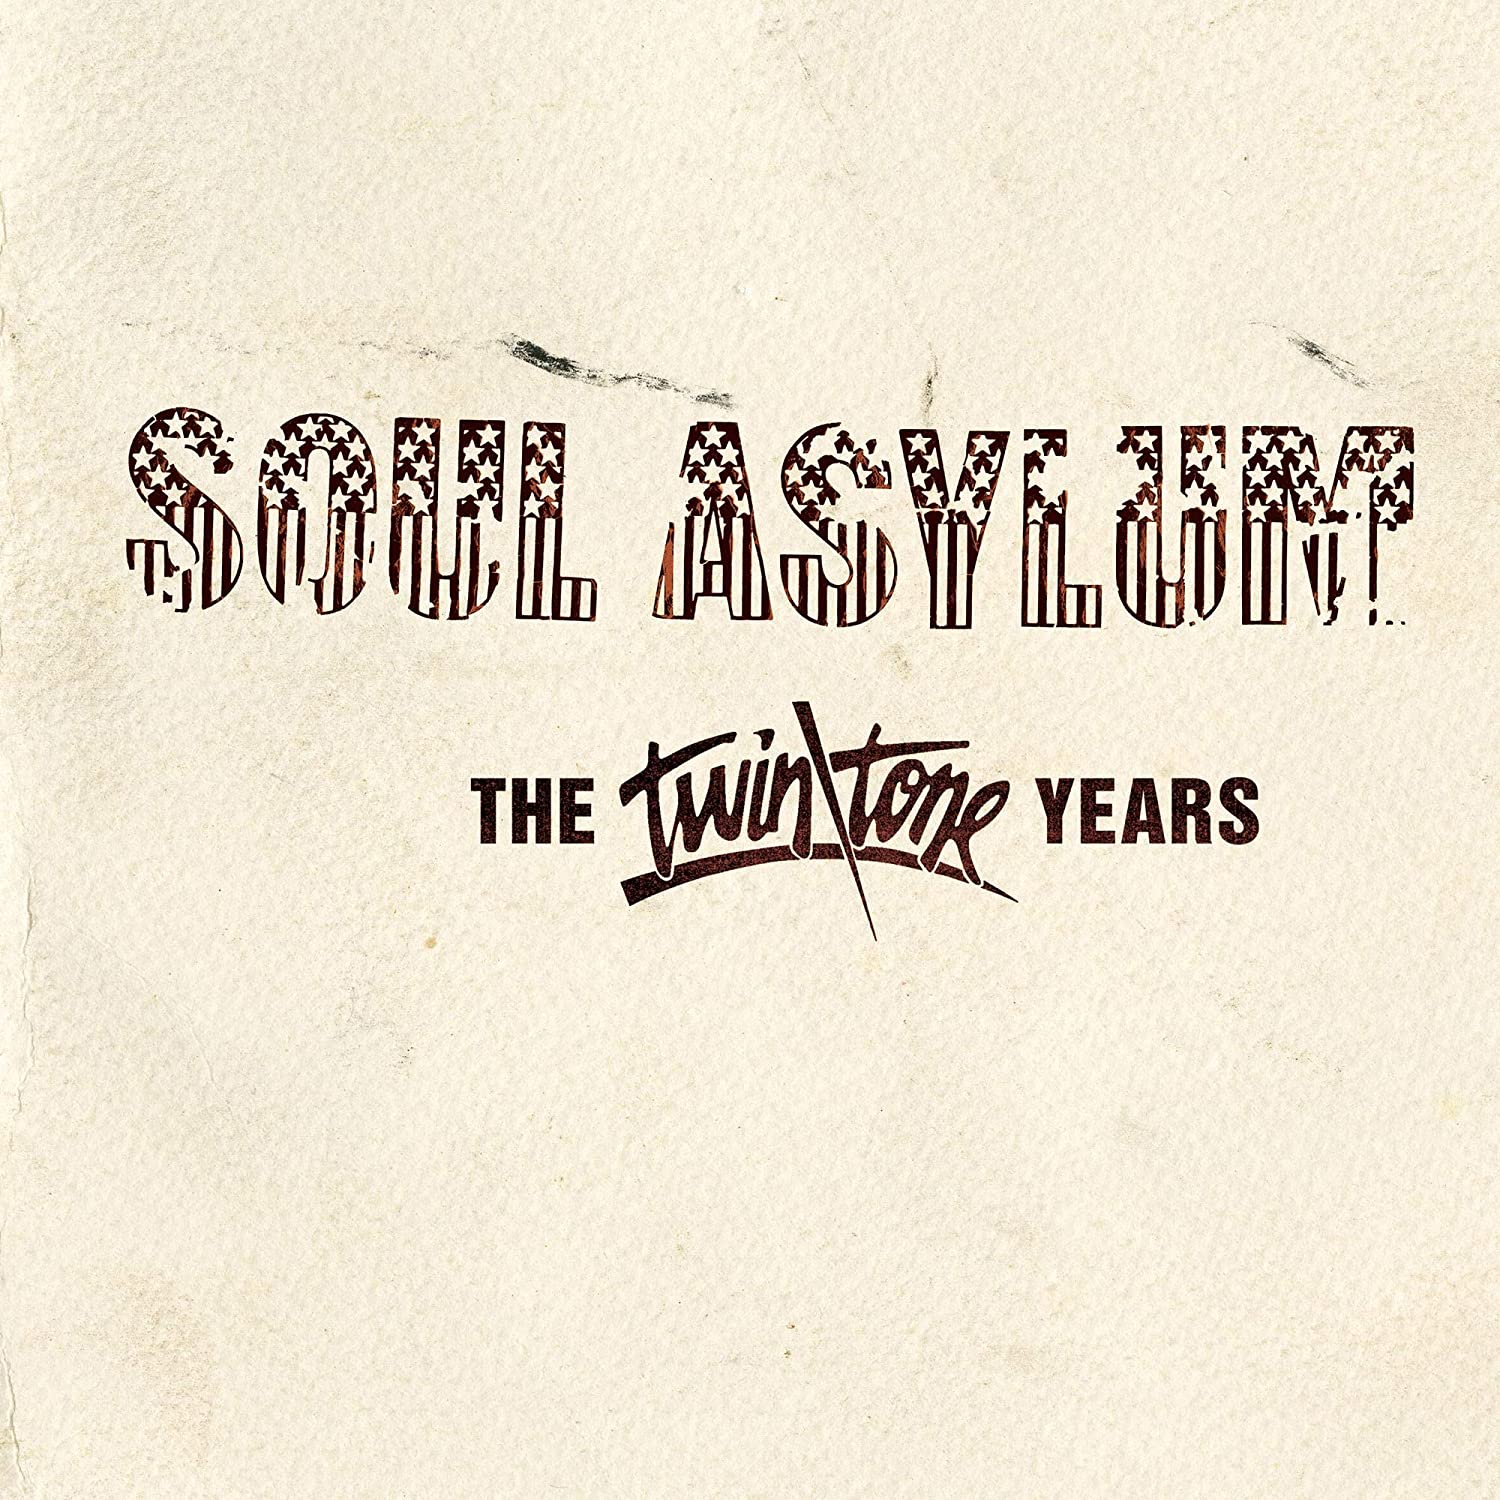 Soul Asylum | The Twin/Tone Years Box Set